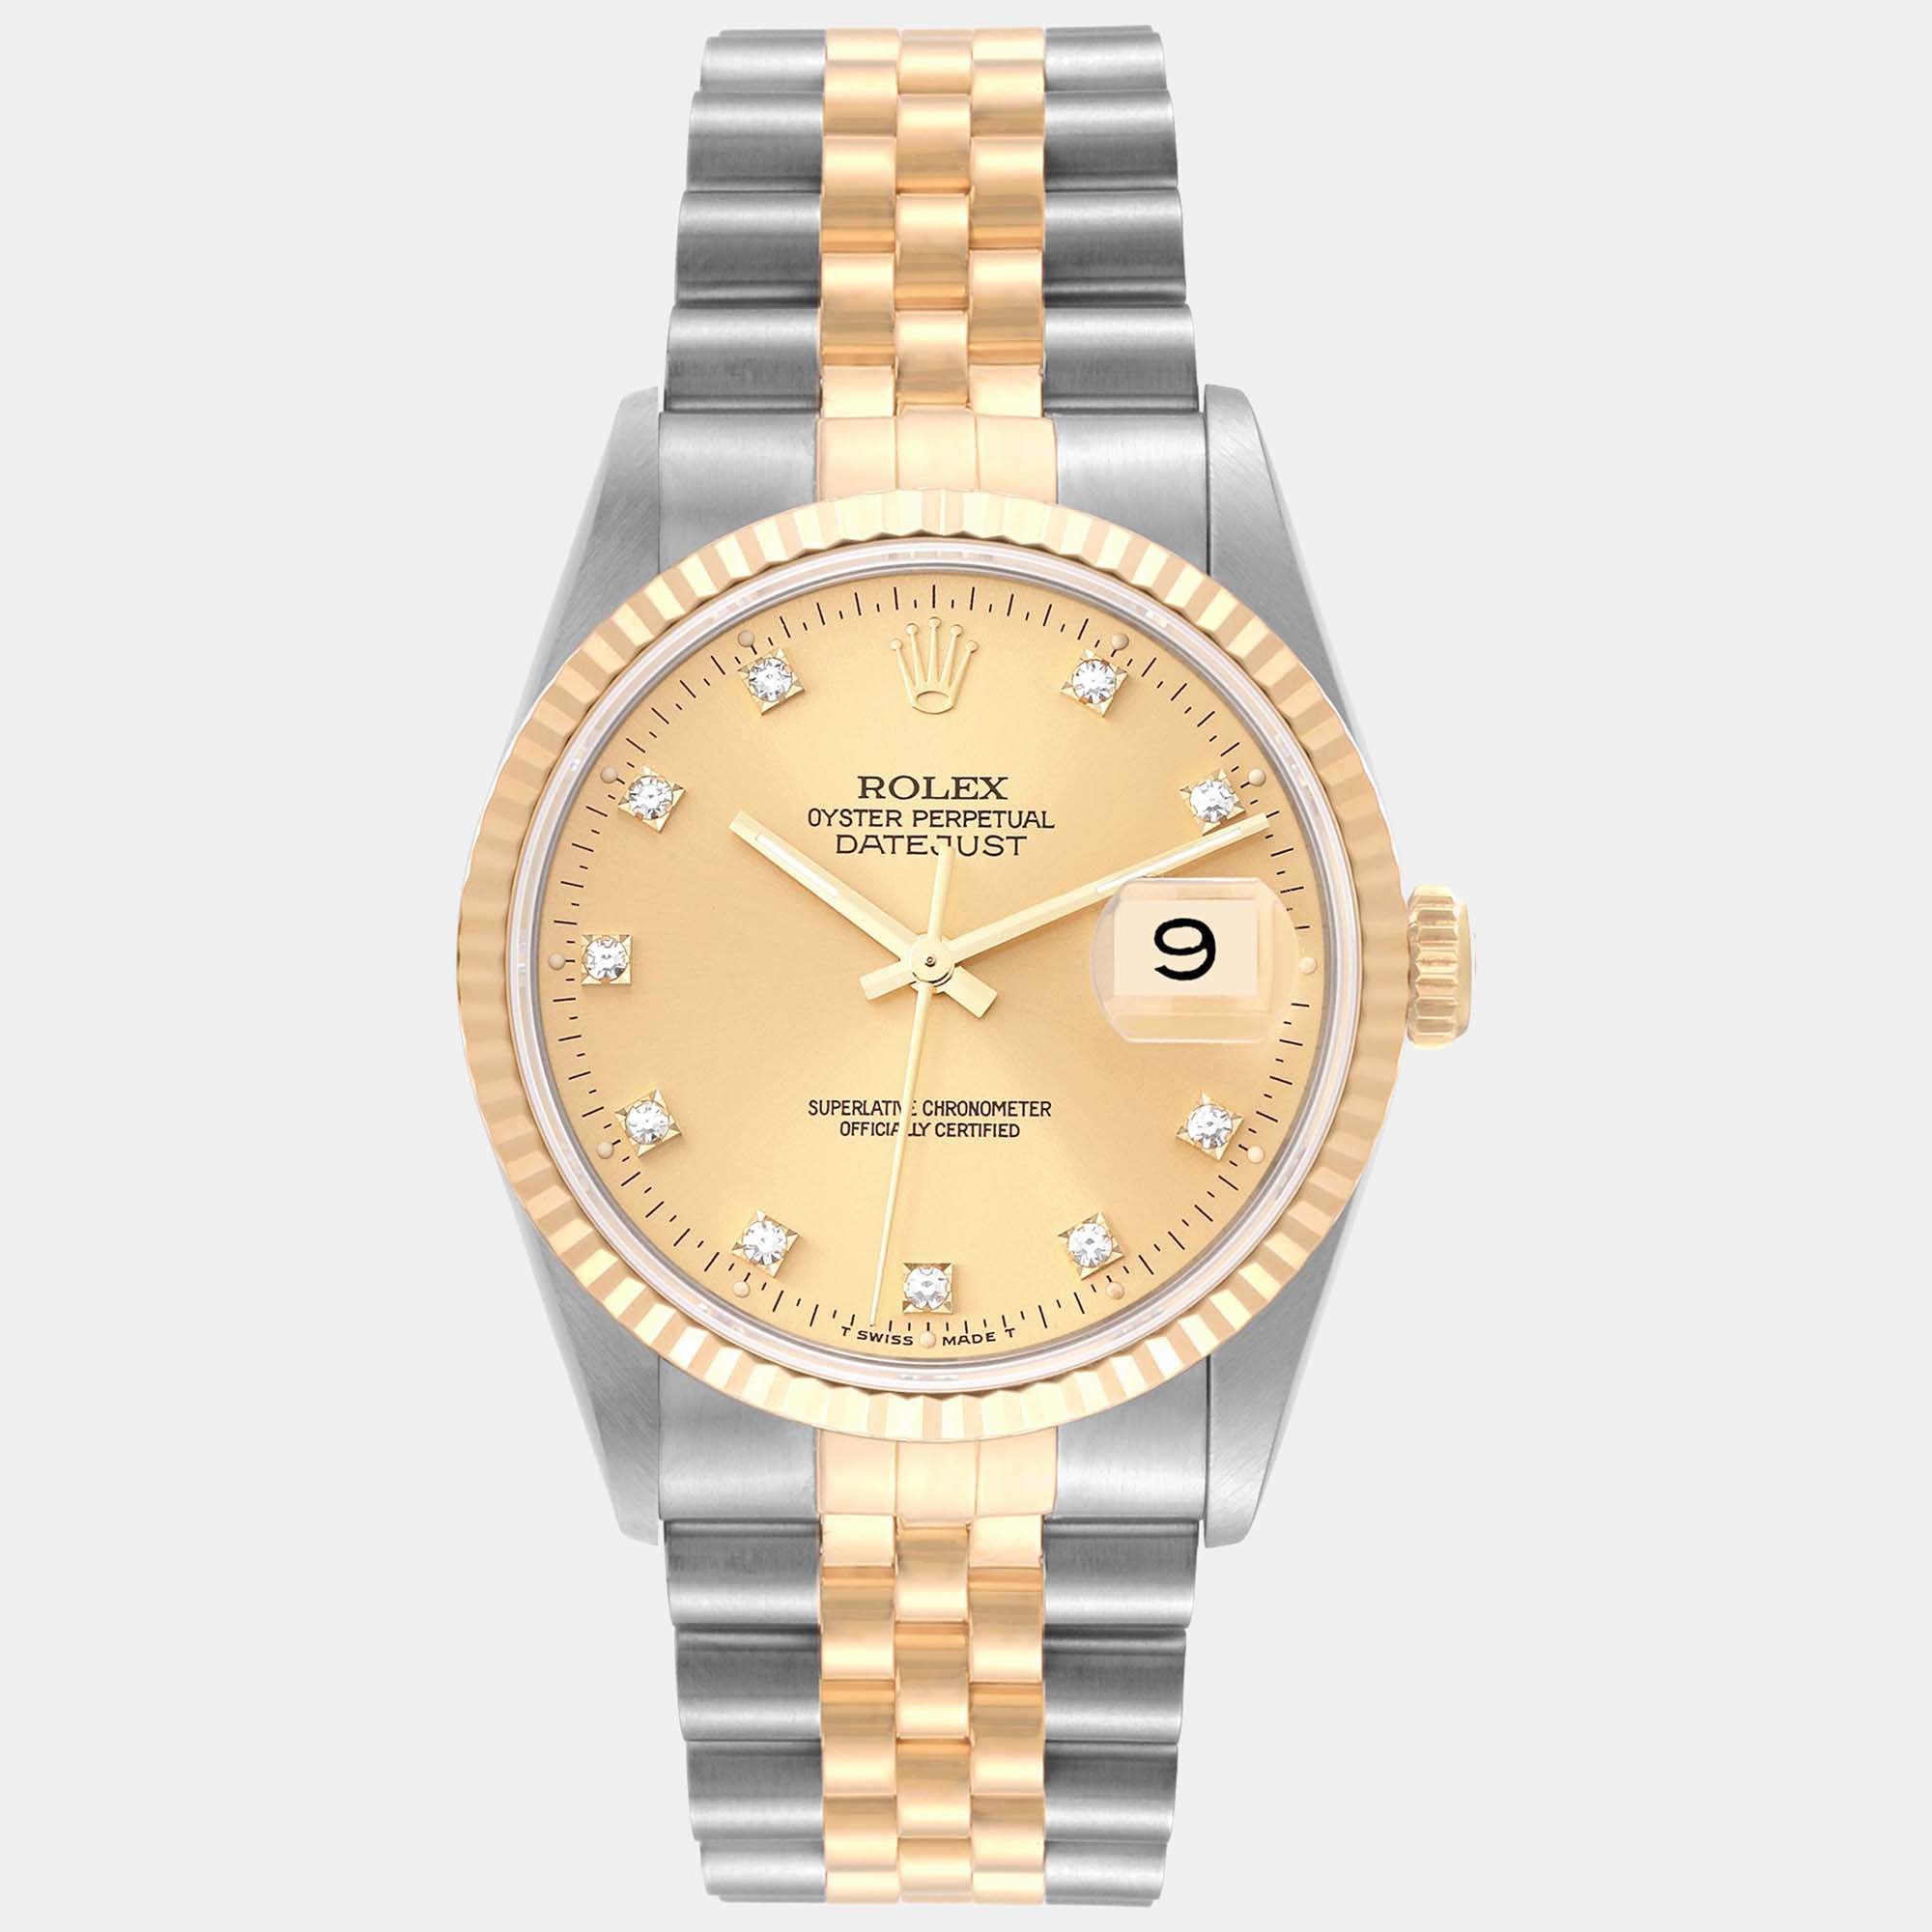 Rolex Datejust Champagne Diamond Dial Steel Yellow Gold Men's Watch 16233 36 mm